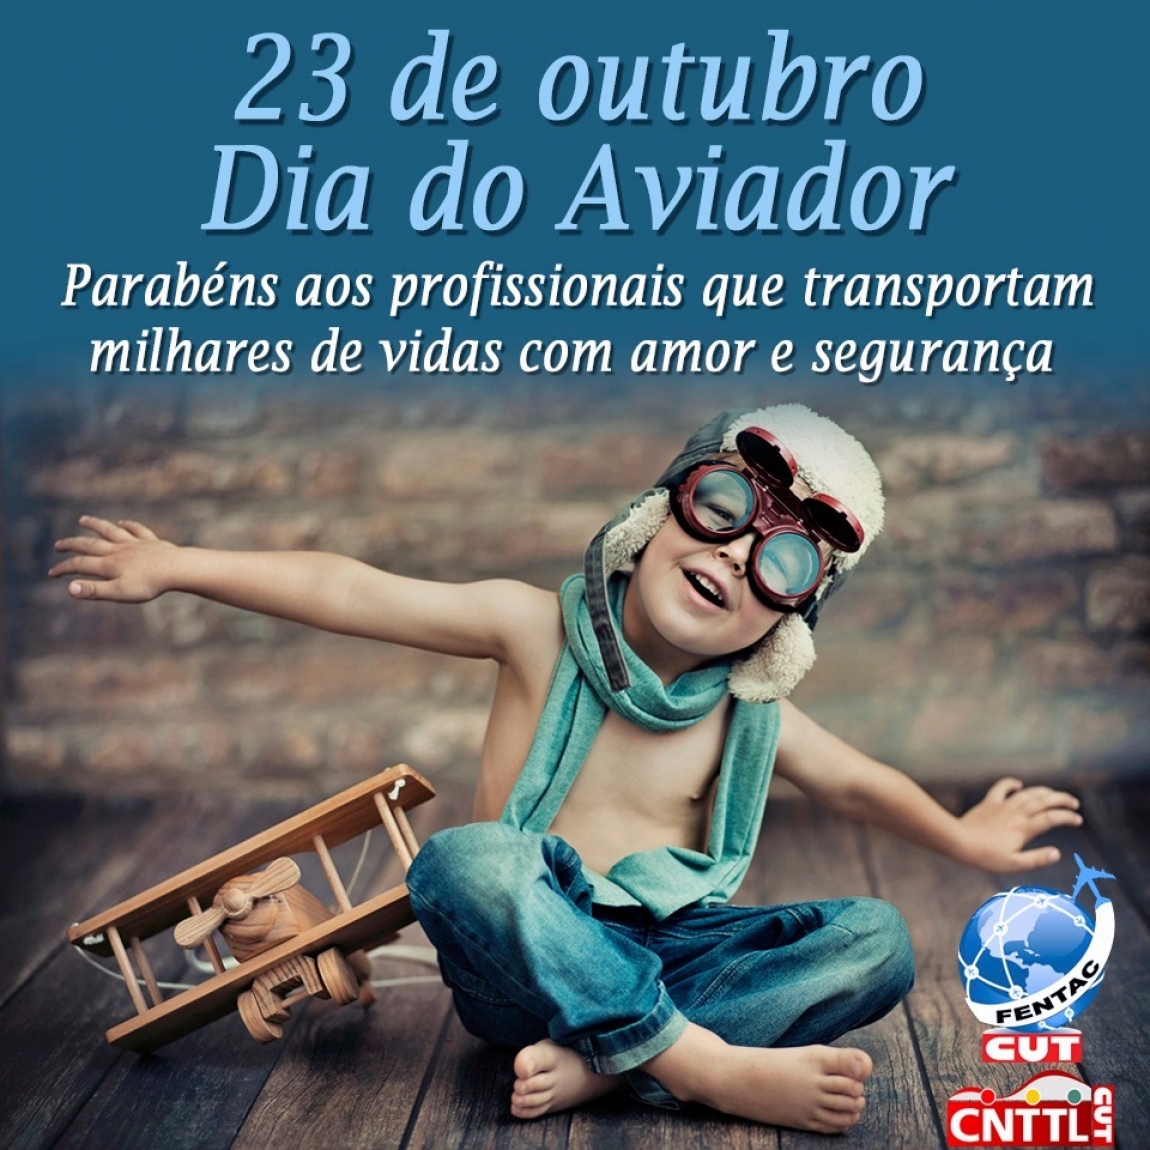 Imagem de CNTTL/CUT parabeniza todos os aviadores do Brasil 